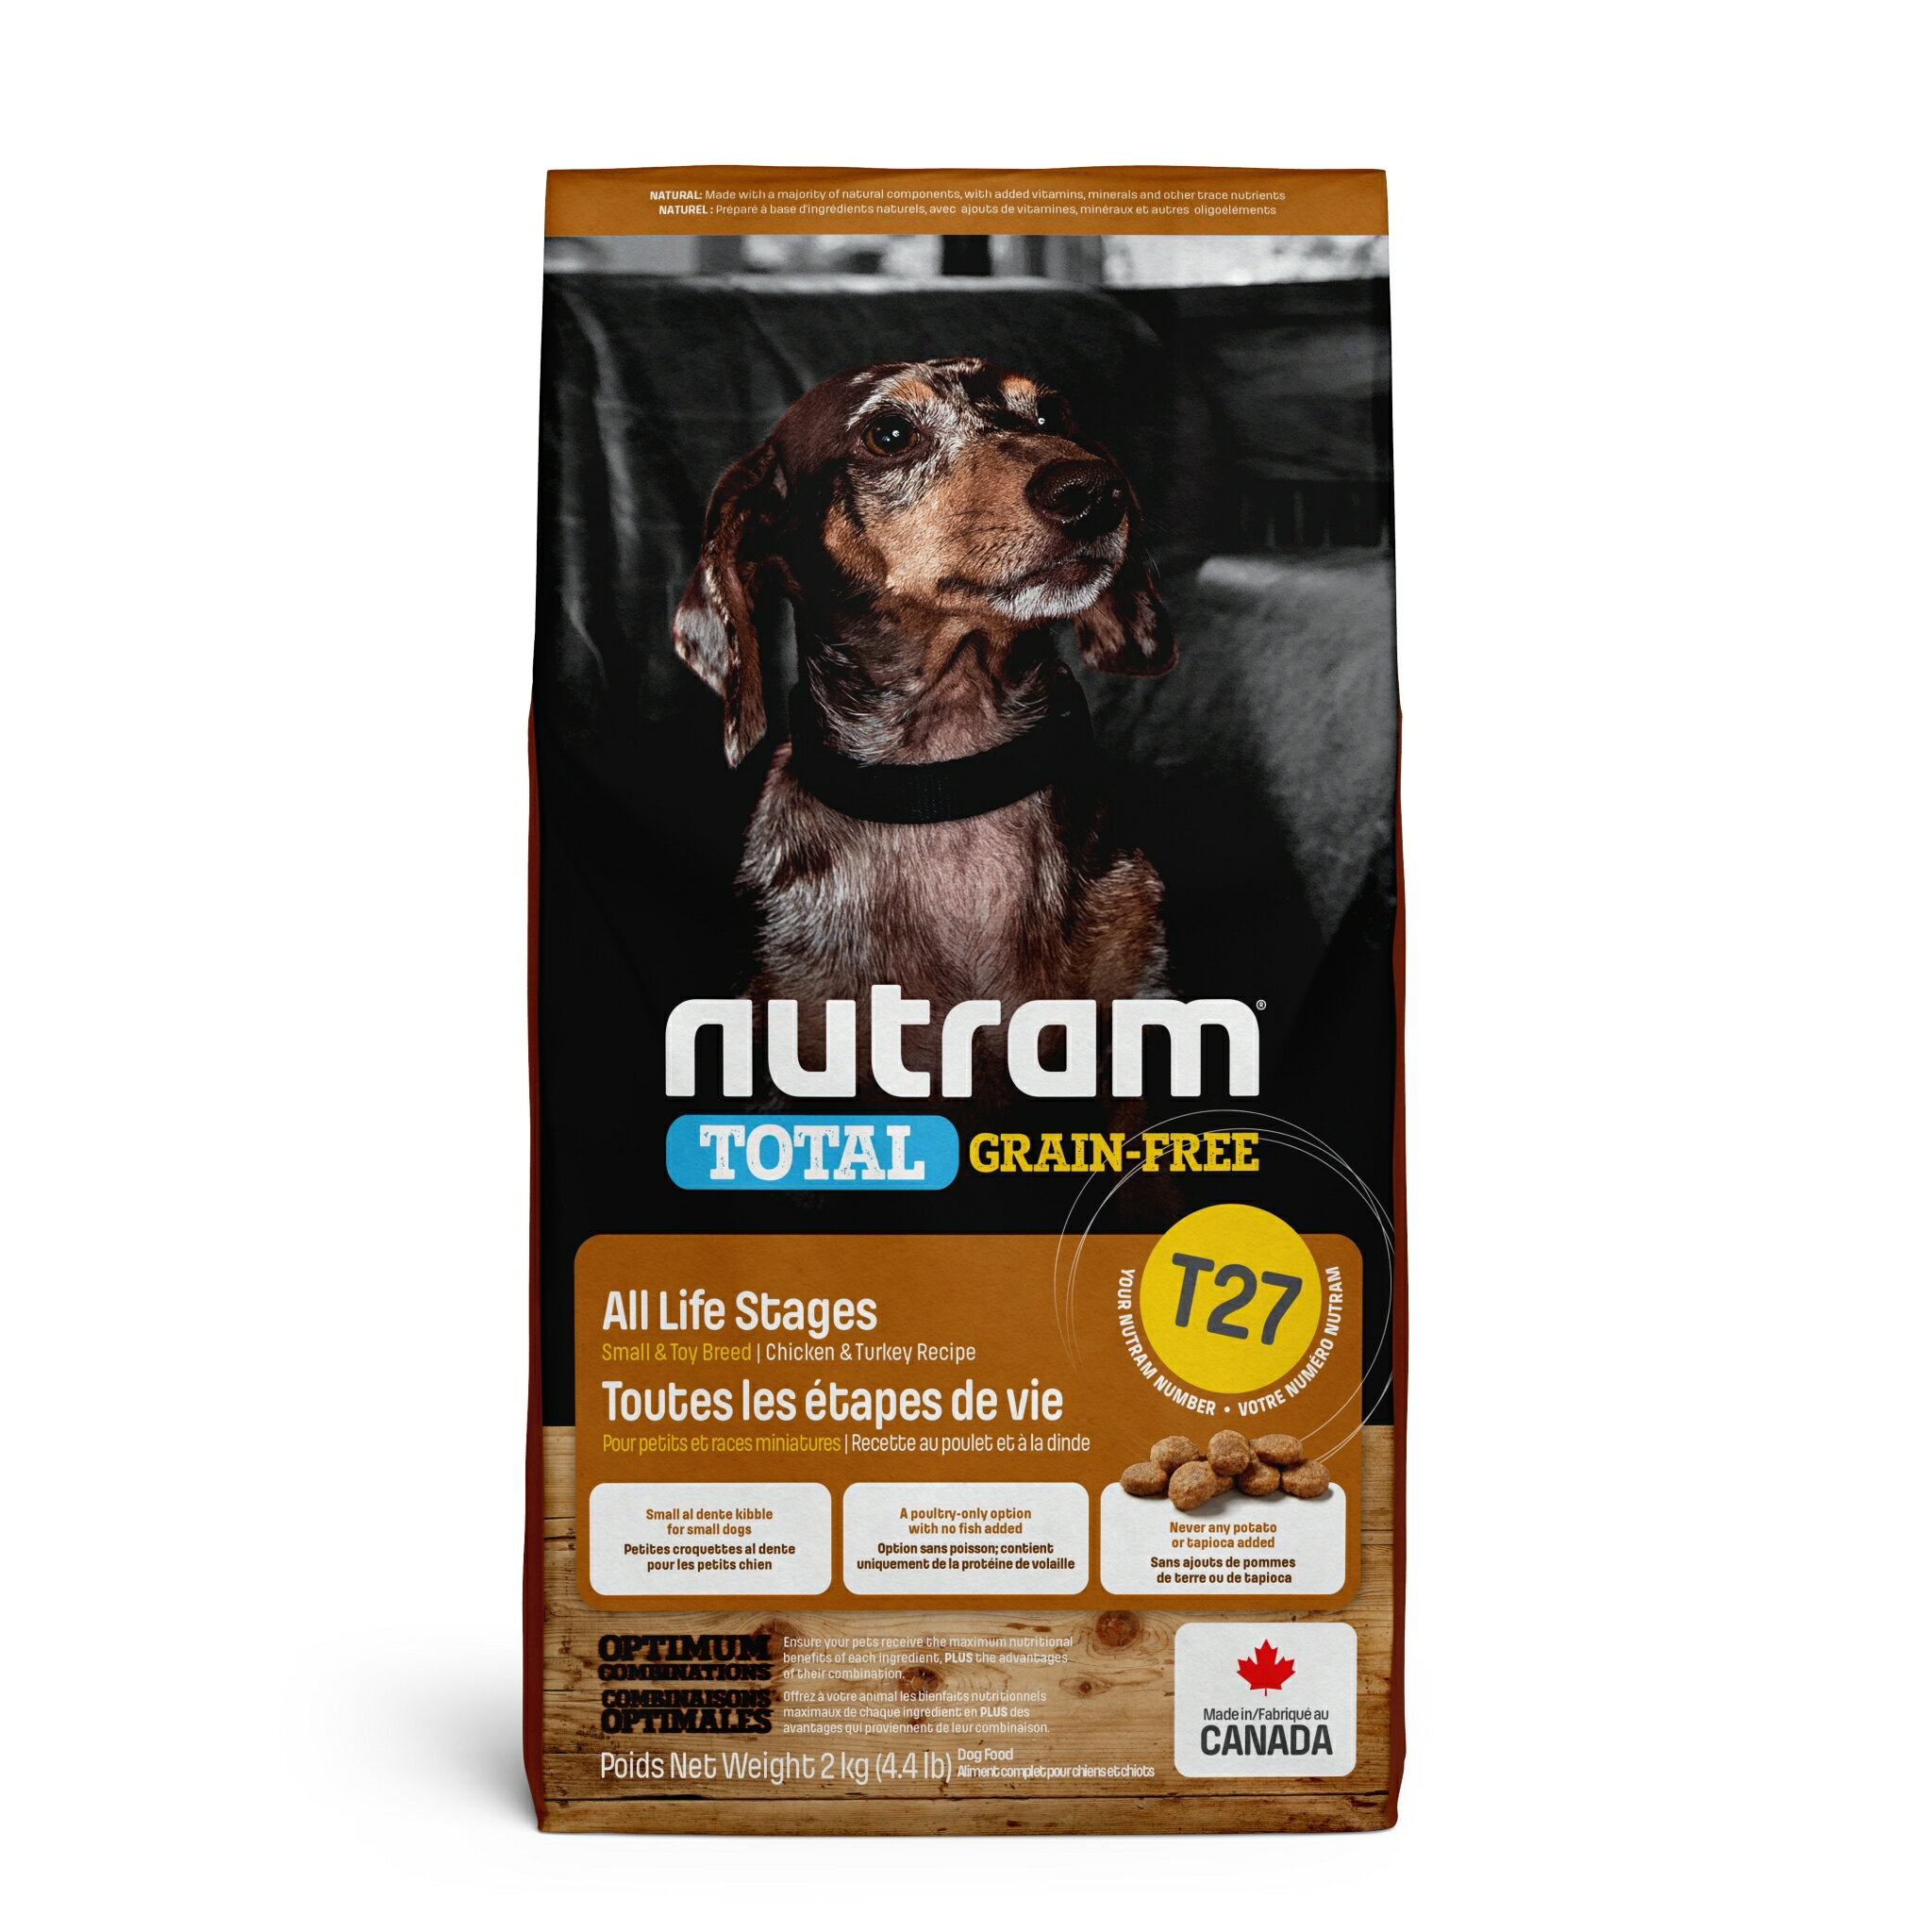 Nutram紐頓 - T27無榖挑嘴全齡迷你犬(火雞+雞肉) 2Kg